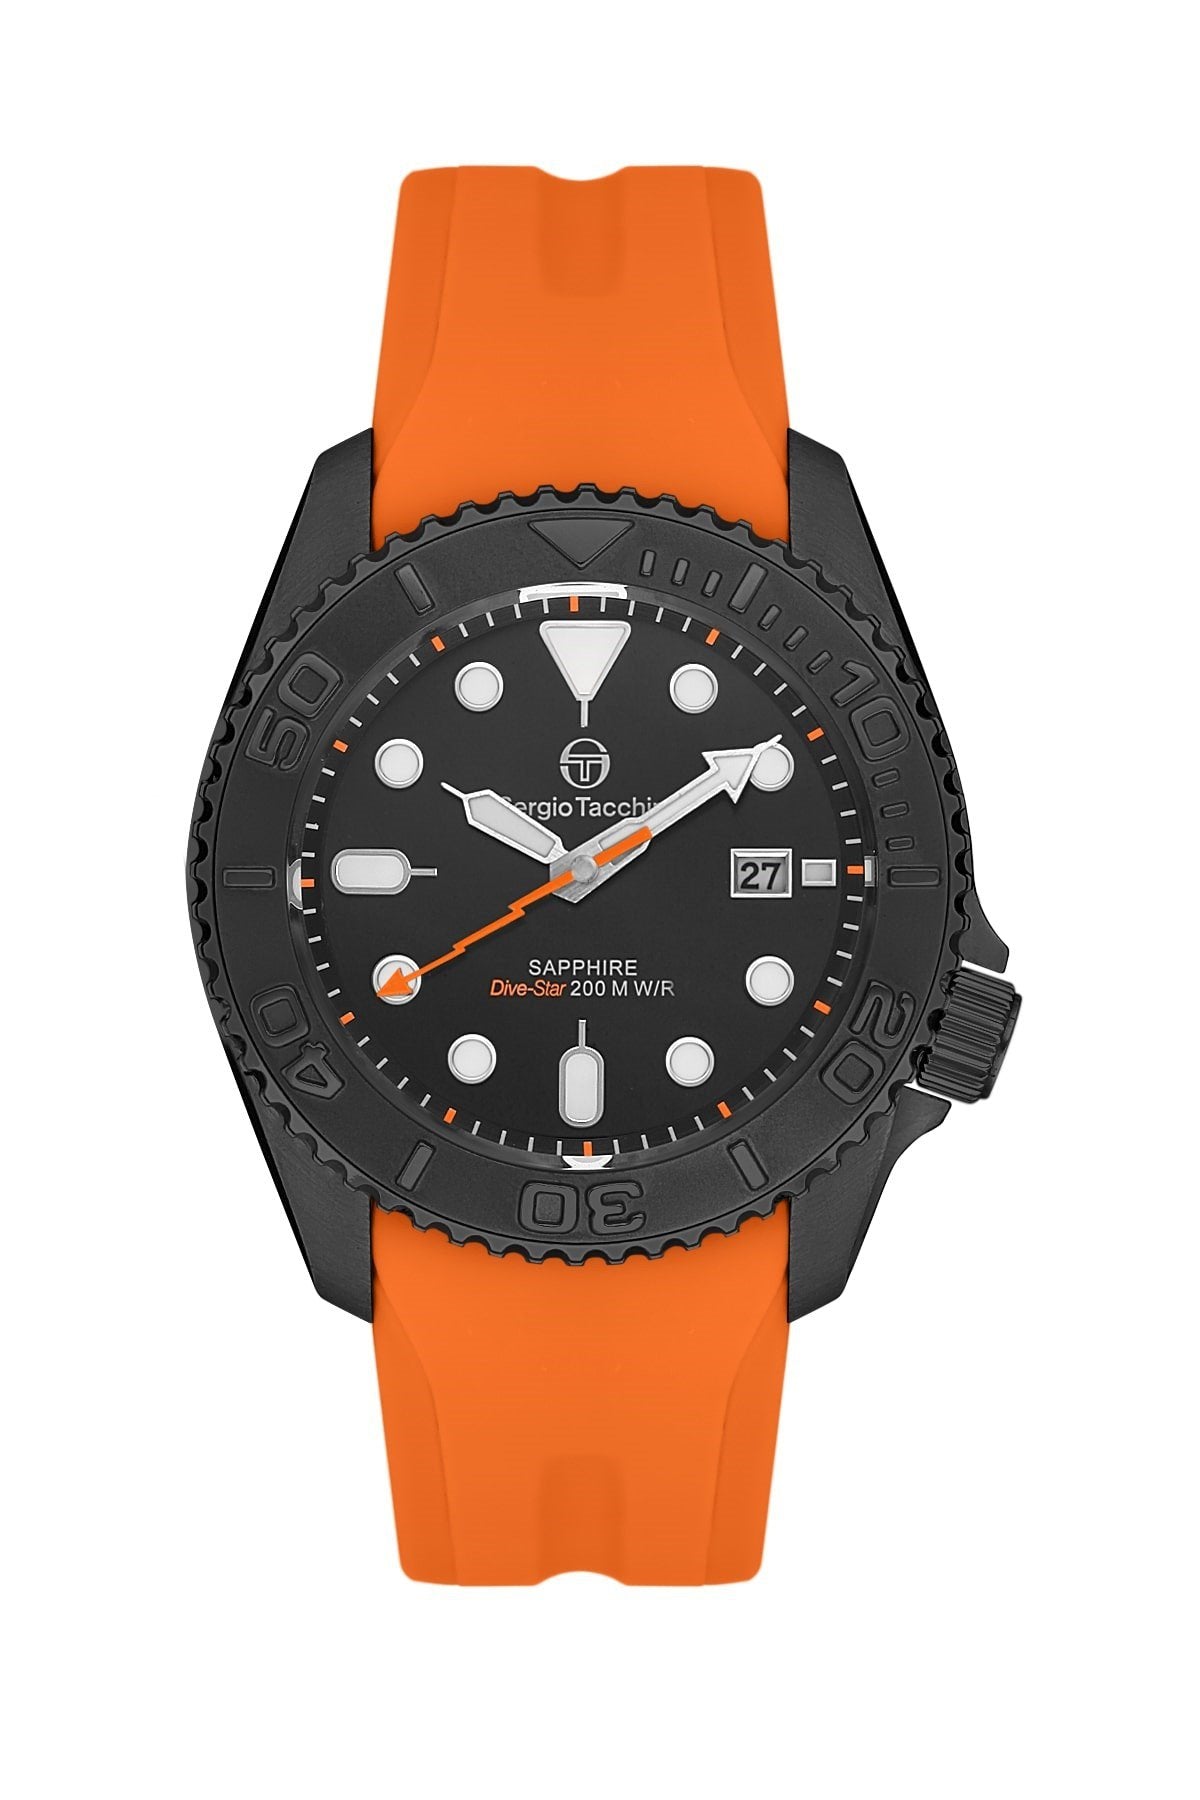 | Sergio Tacchini Men's Watch ST.3.10002-3 - Takreem Detail | - #sho| Sergio Tacchini Men's Watch ST.3.10002-3 - Takreem Detail |p_name#| Sergio Tacchini Men's Watch ST.3.10002-3 - Takreem Detail |WatchSergio TacchiniTakreem.joST.3.10002-38682308231441BlackRubberMen| Sergio Tacchini Men's Watch ST.3.10002-3 - Takreem Detail |